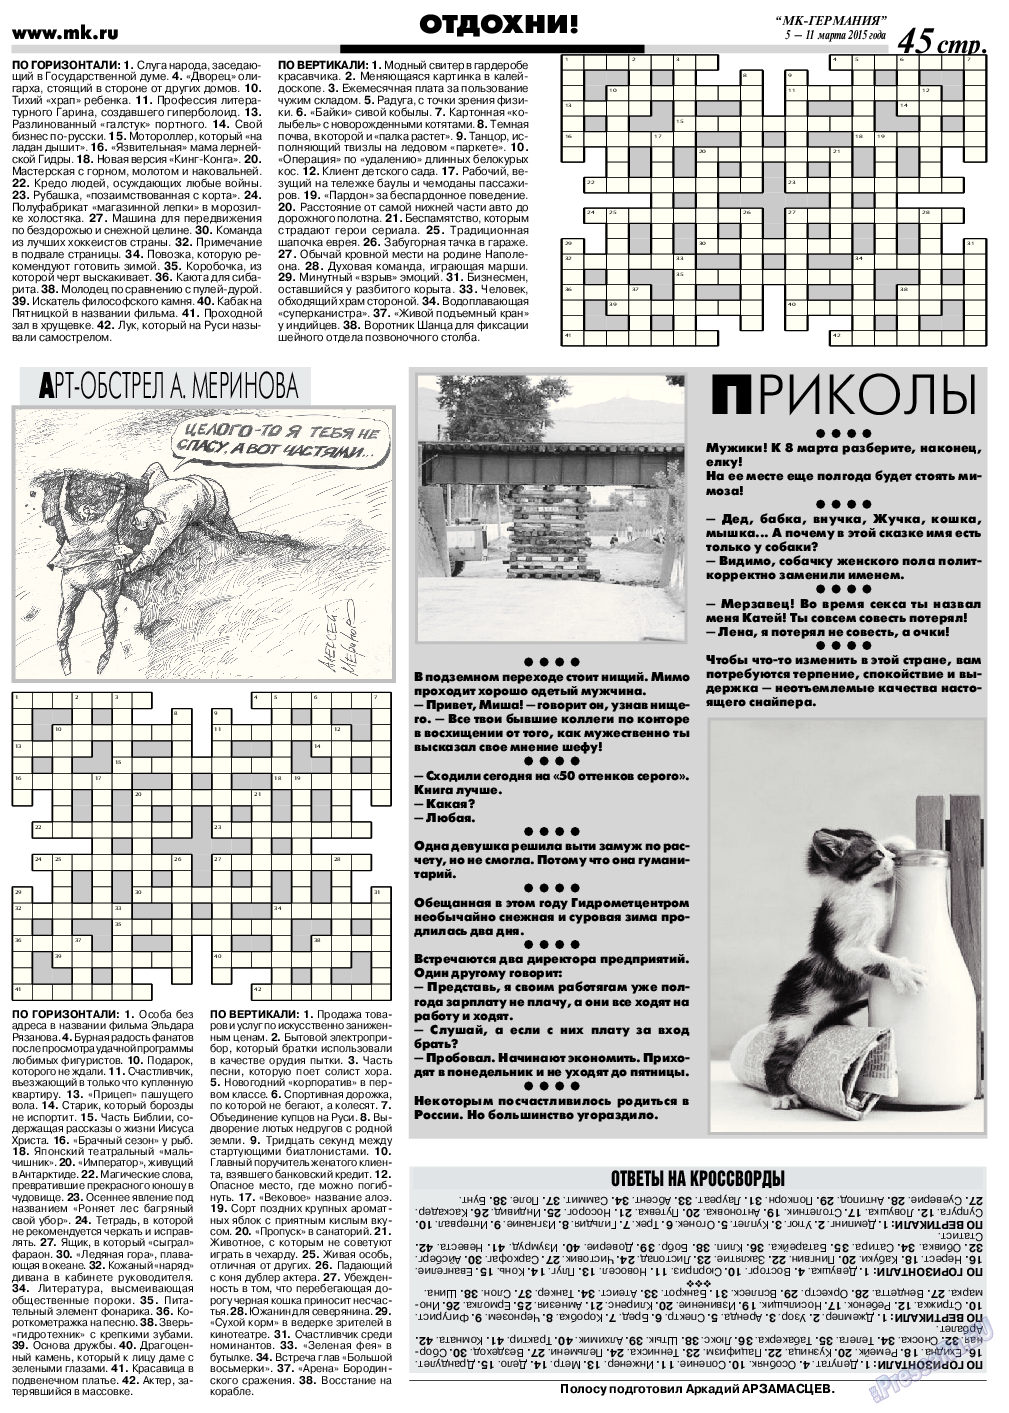 МК-Германия, газета. 2015 №10 стр.45